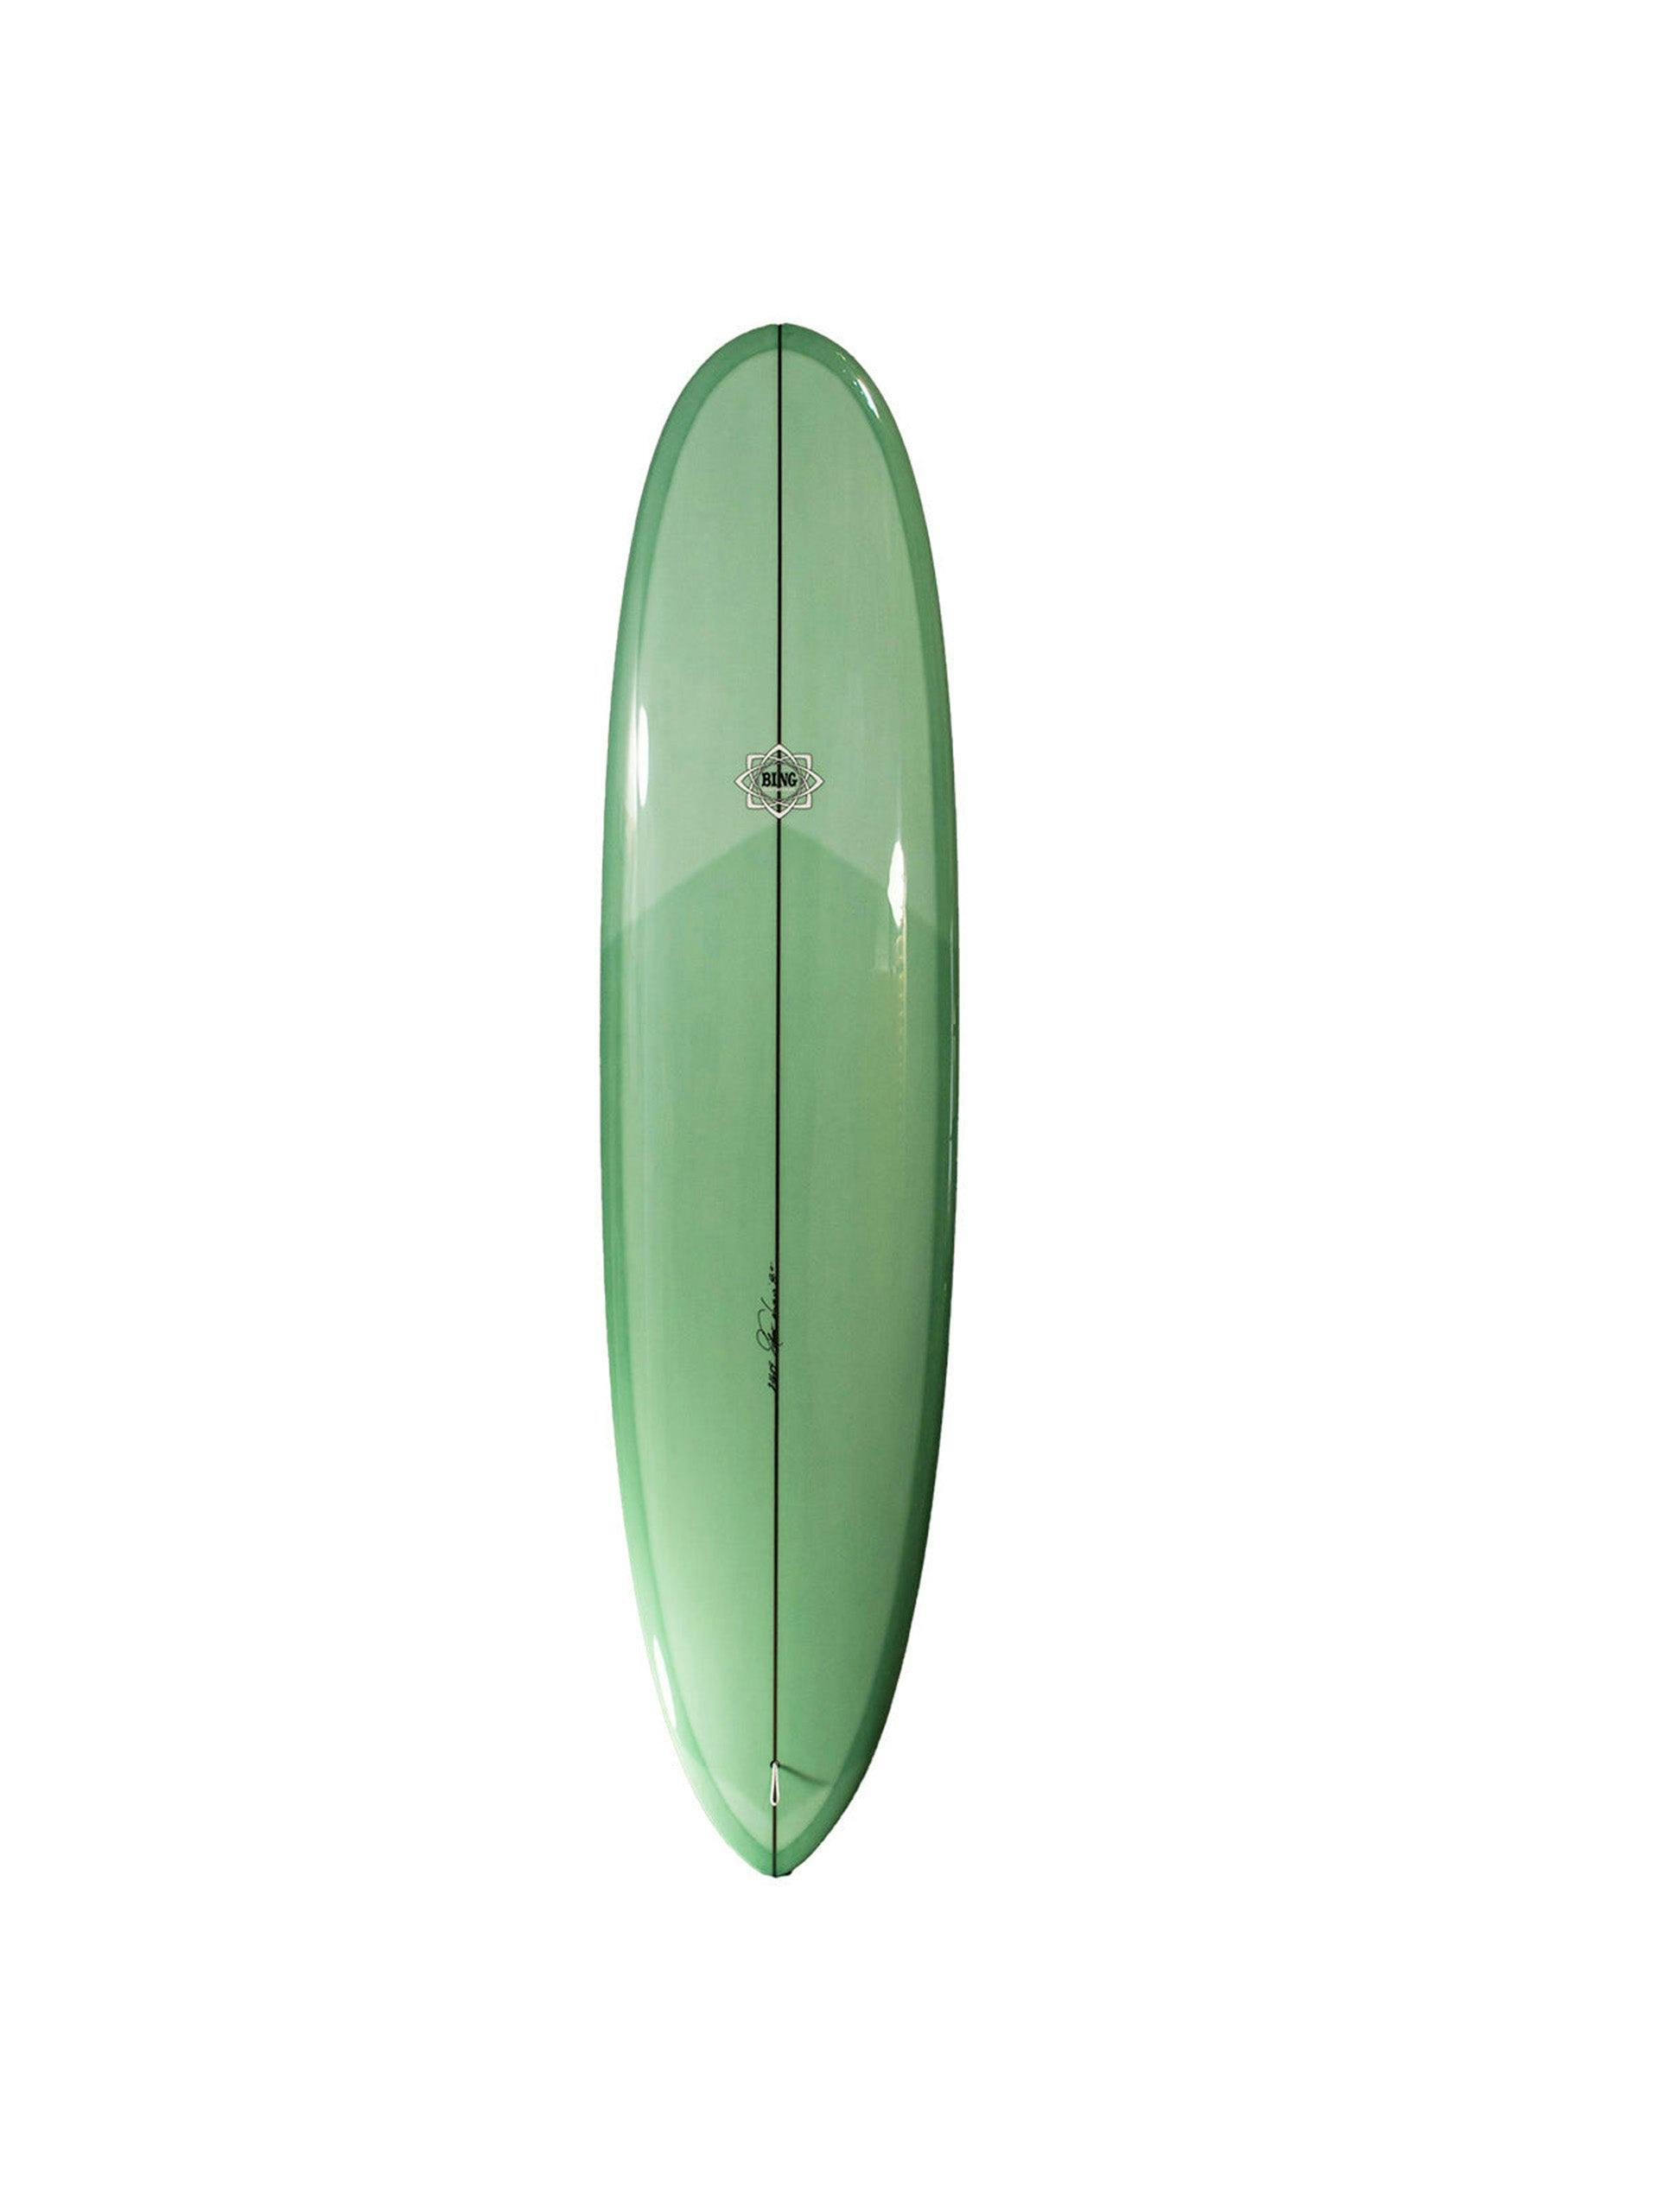 Bing Collector midlength surfboard